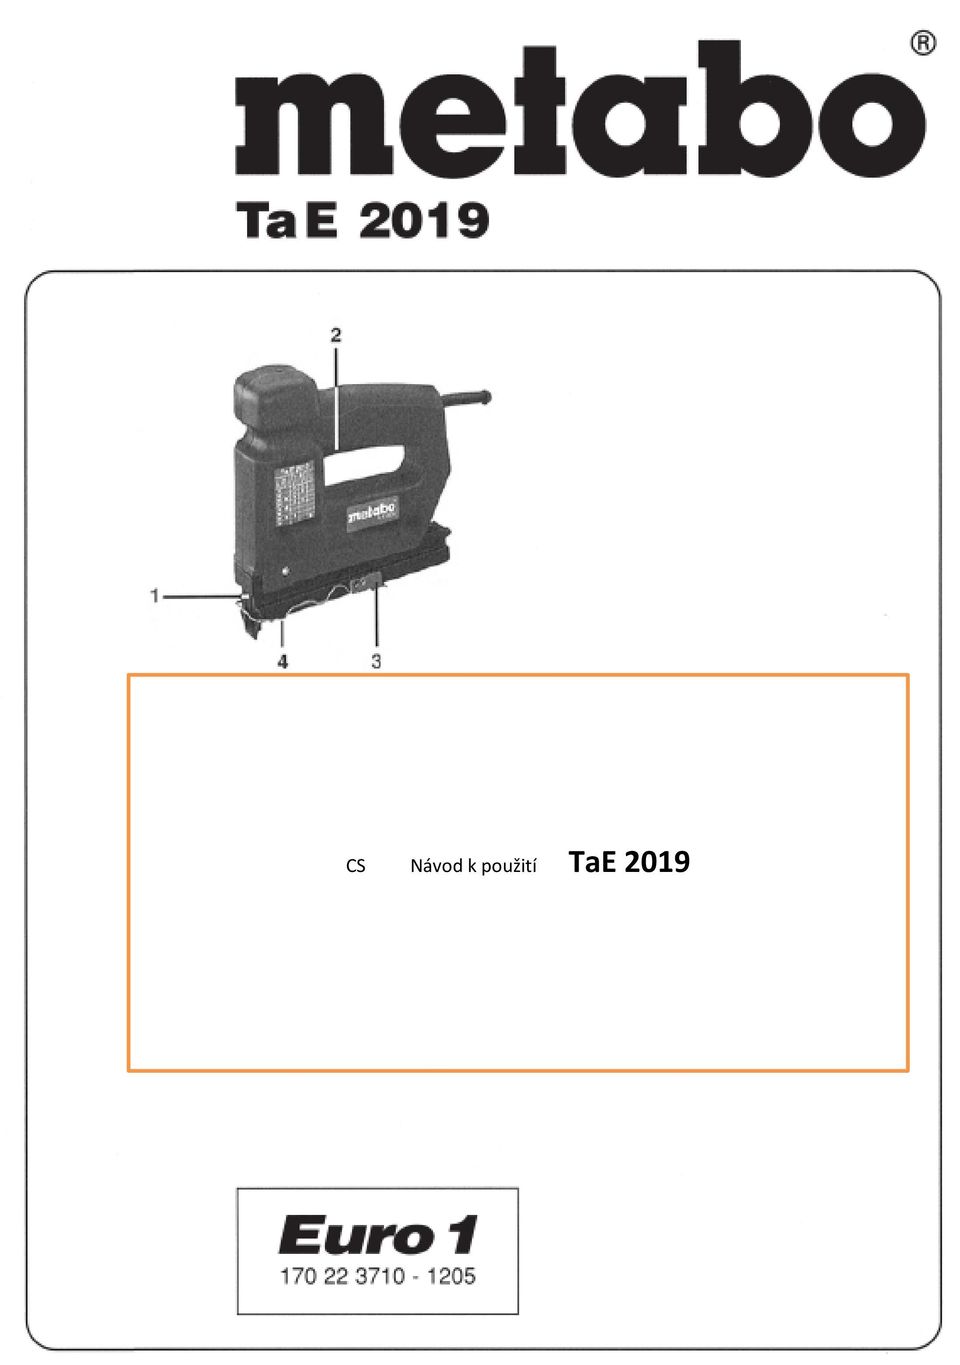 TaE 2019